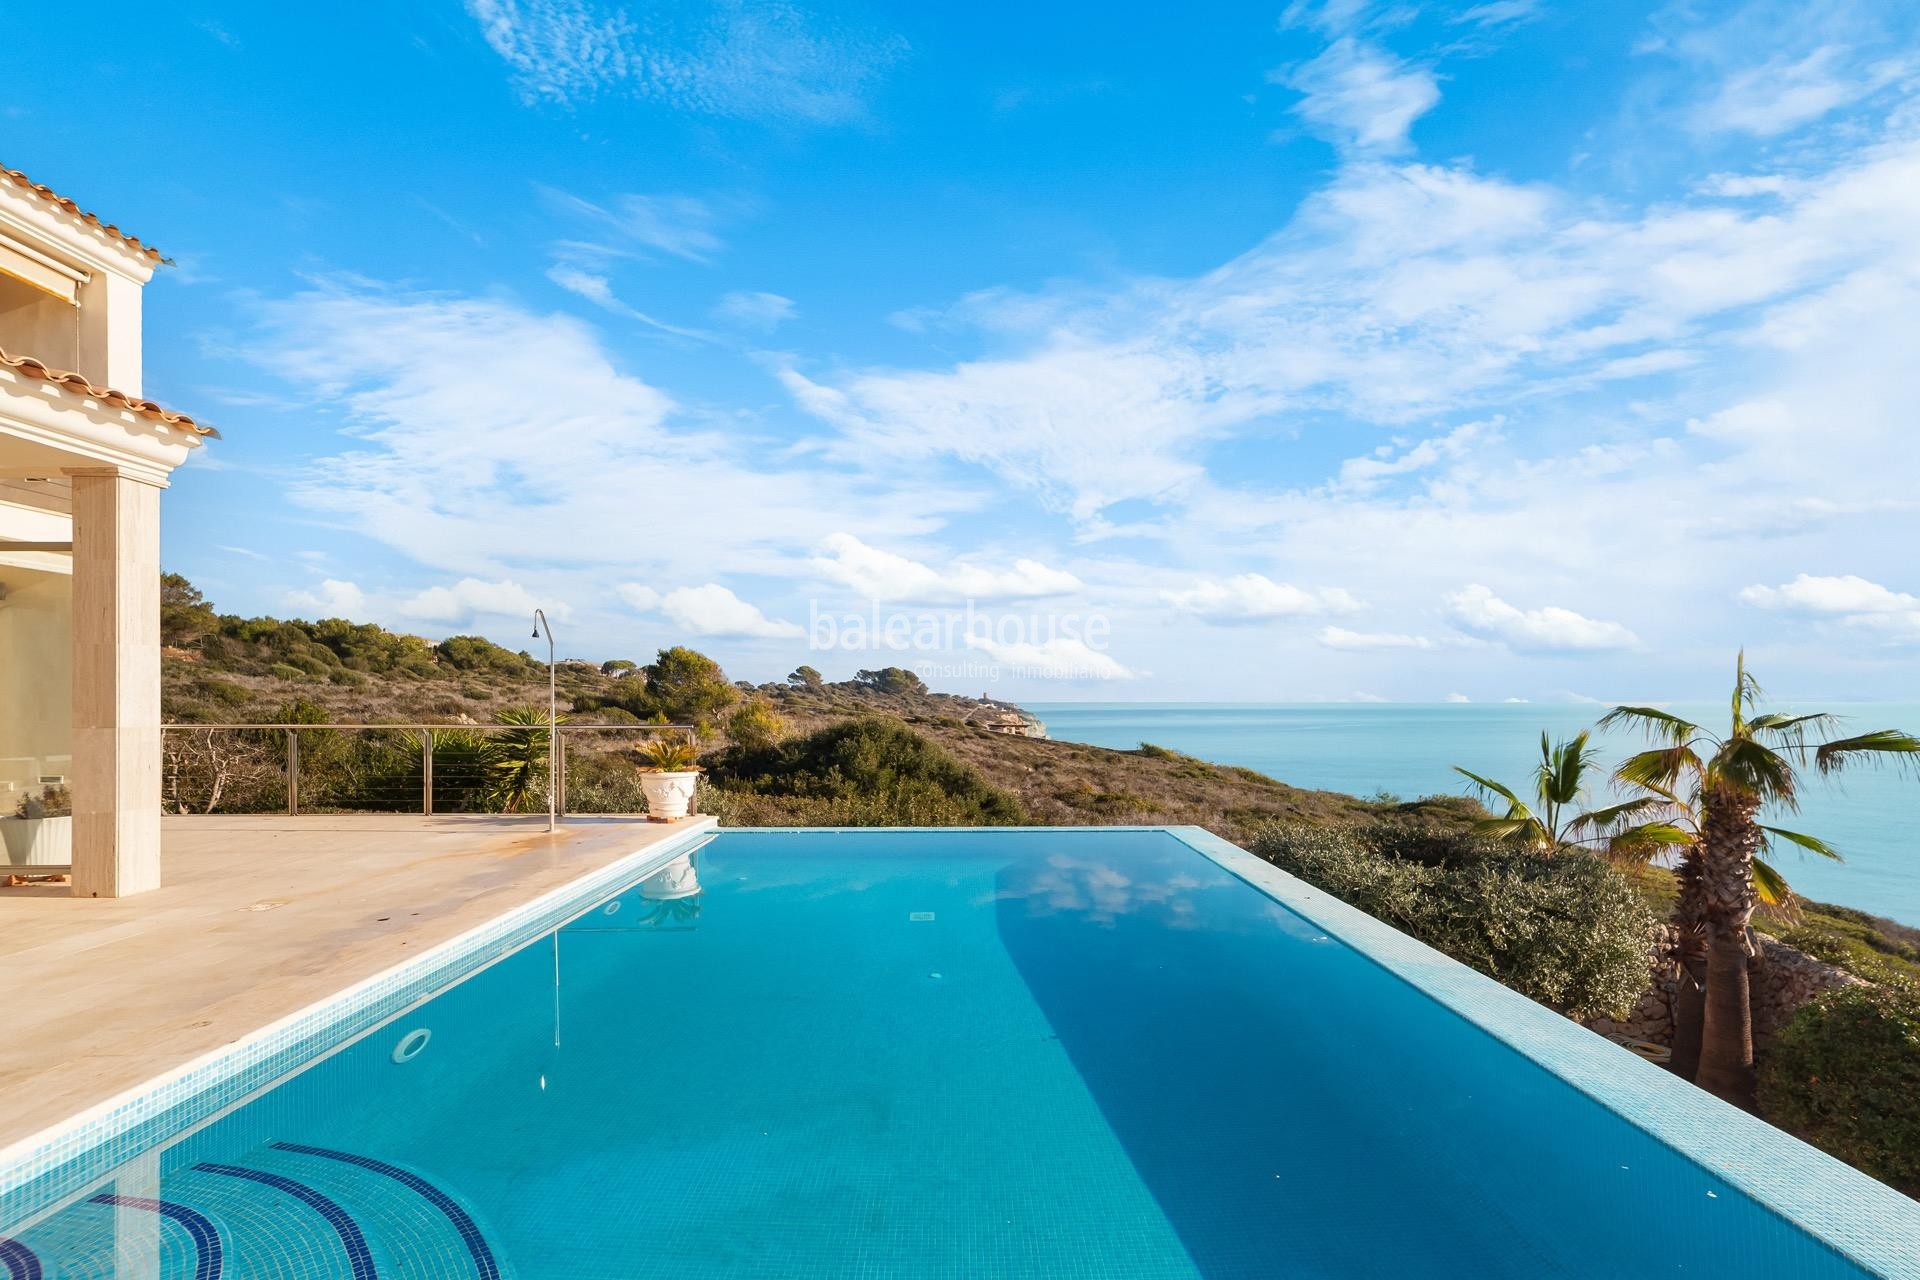 Splendid villa in Porto Cristo with stunning sea views next to beautiful coves